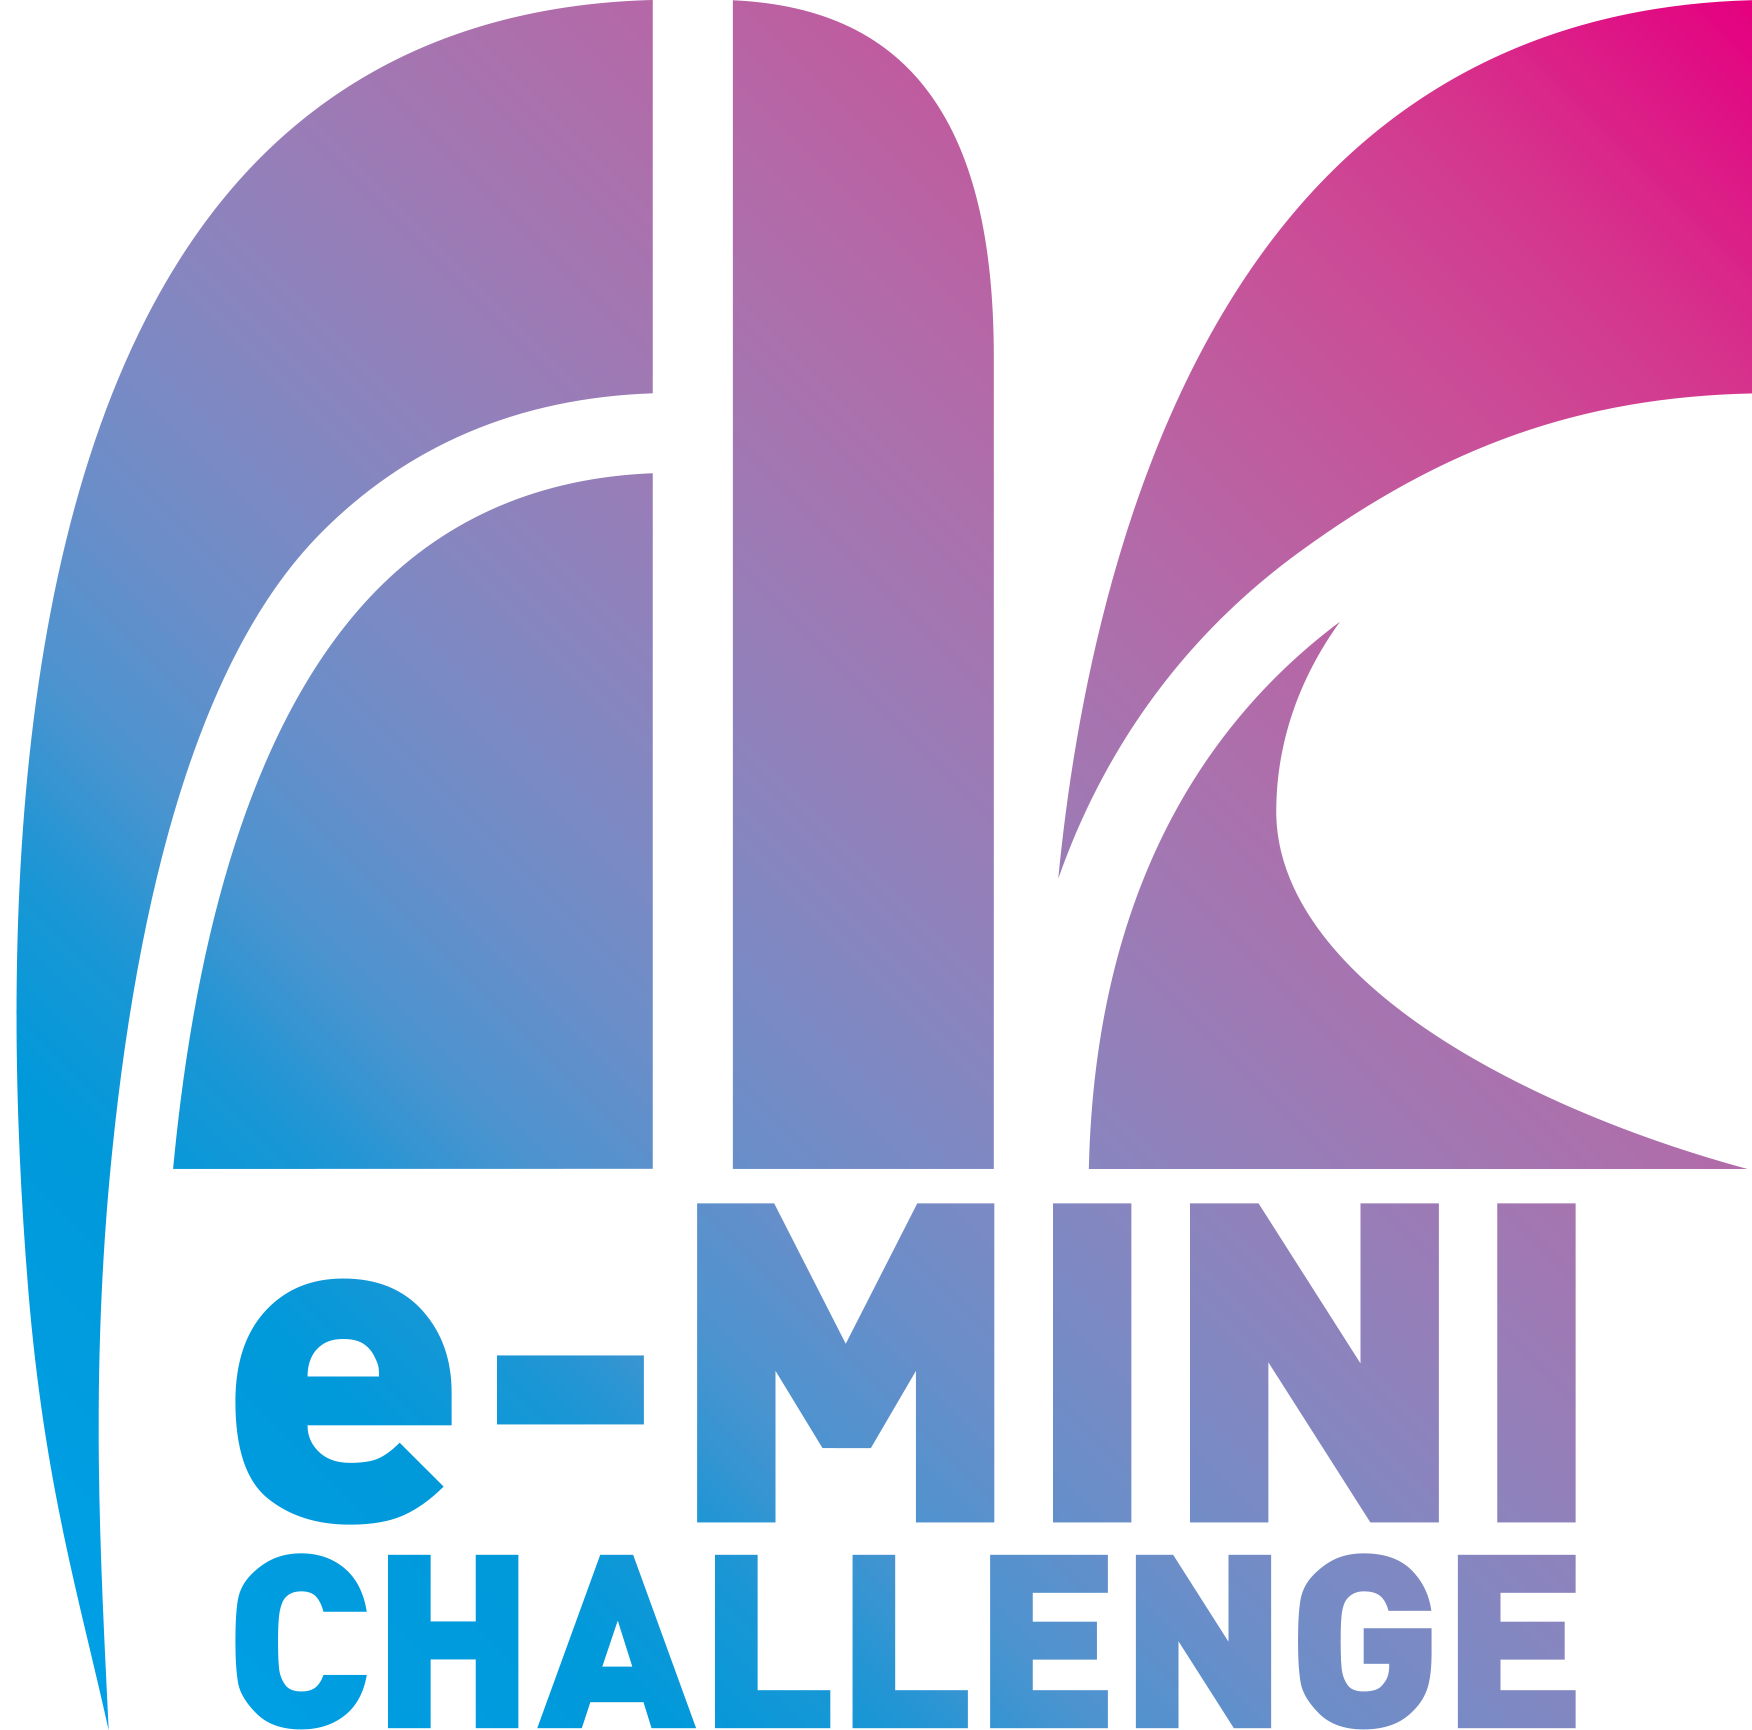 e-MINI CHALLENGE® 2021 S1 Rd.2 A/B ポイントランキング公開